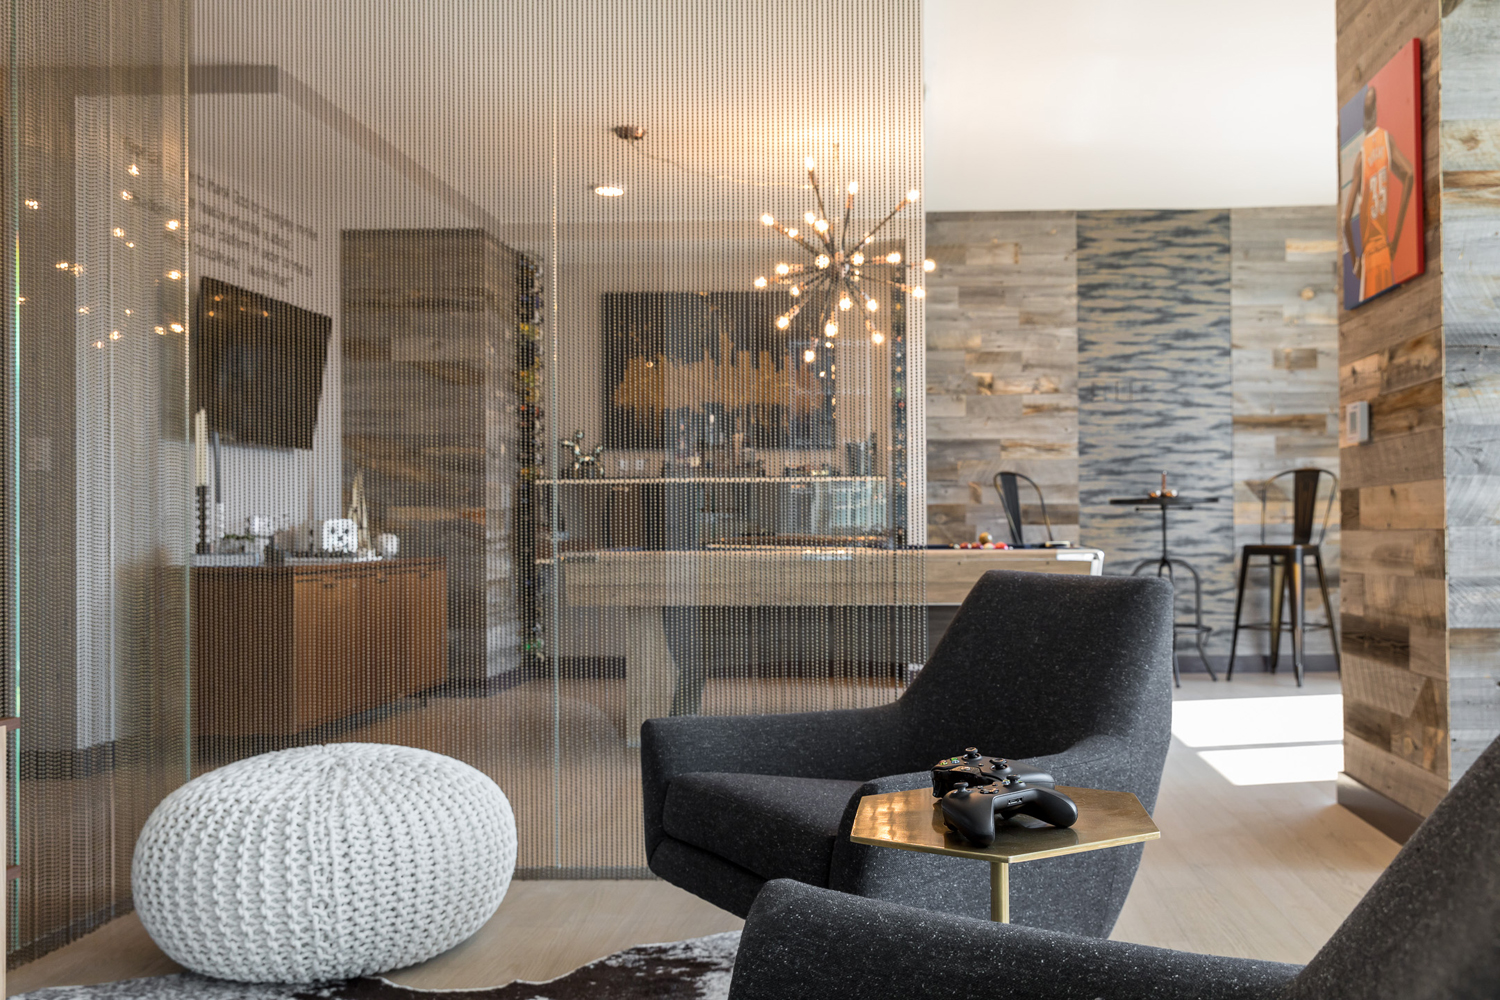 Ovadia Design: Crafting Timeless And Innovative Interior Designs